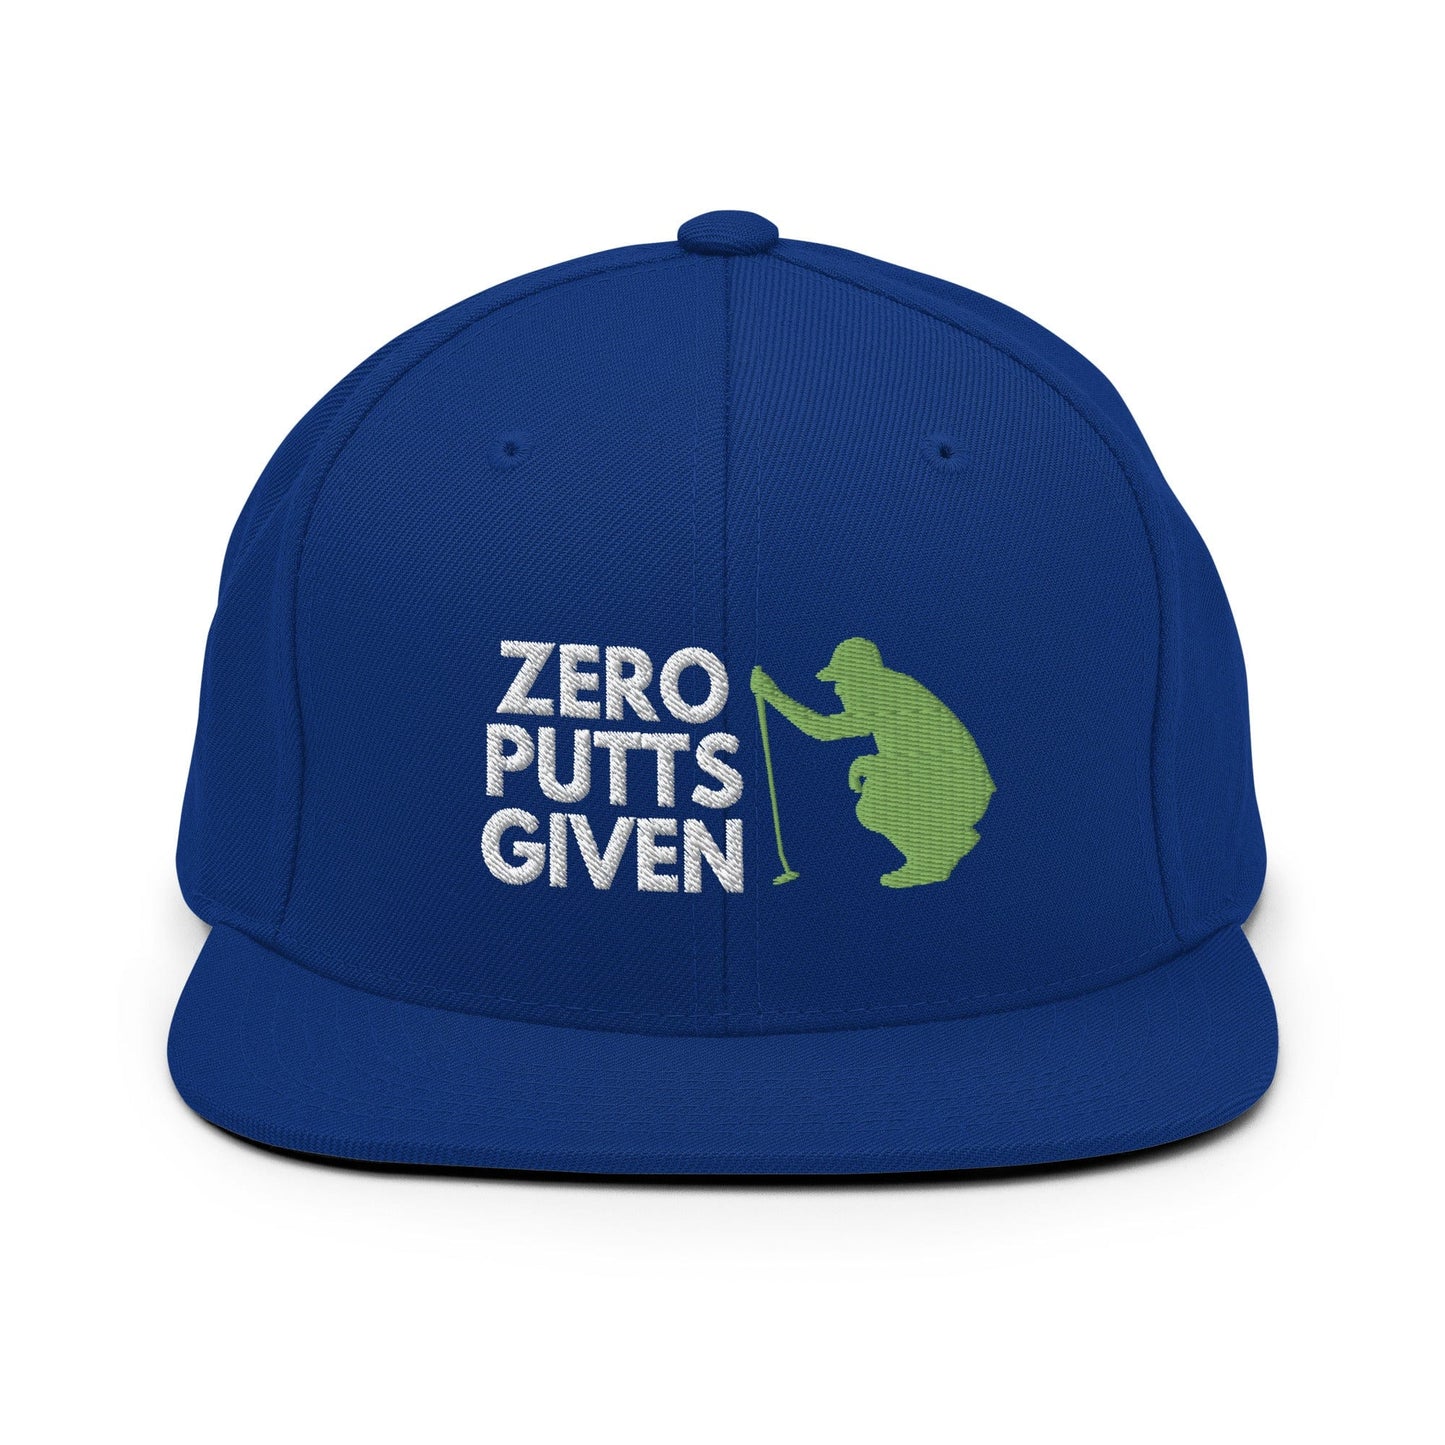 Funny Golfer Gifts  Snapback Hat Royal Blue Zero Putts Given Hat Snapback Hat